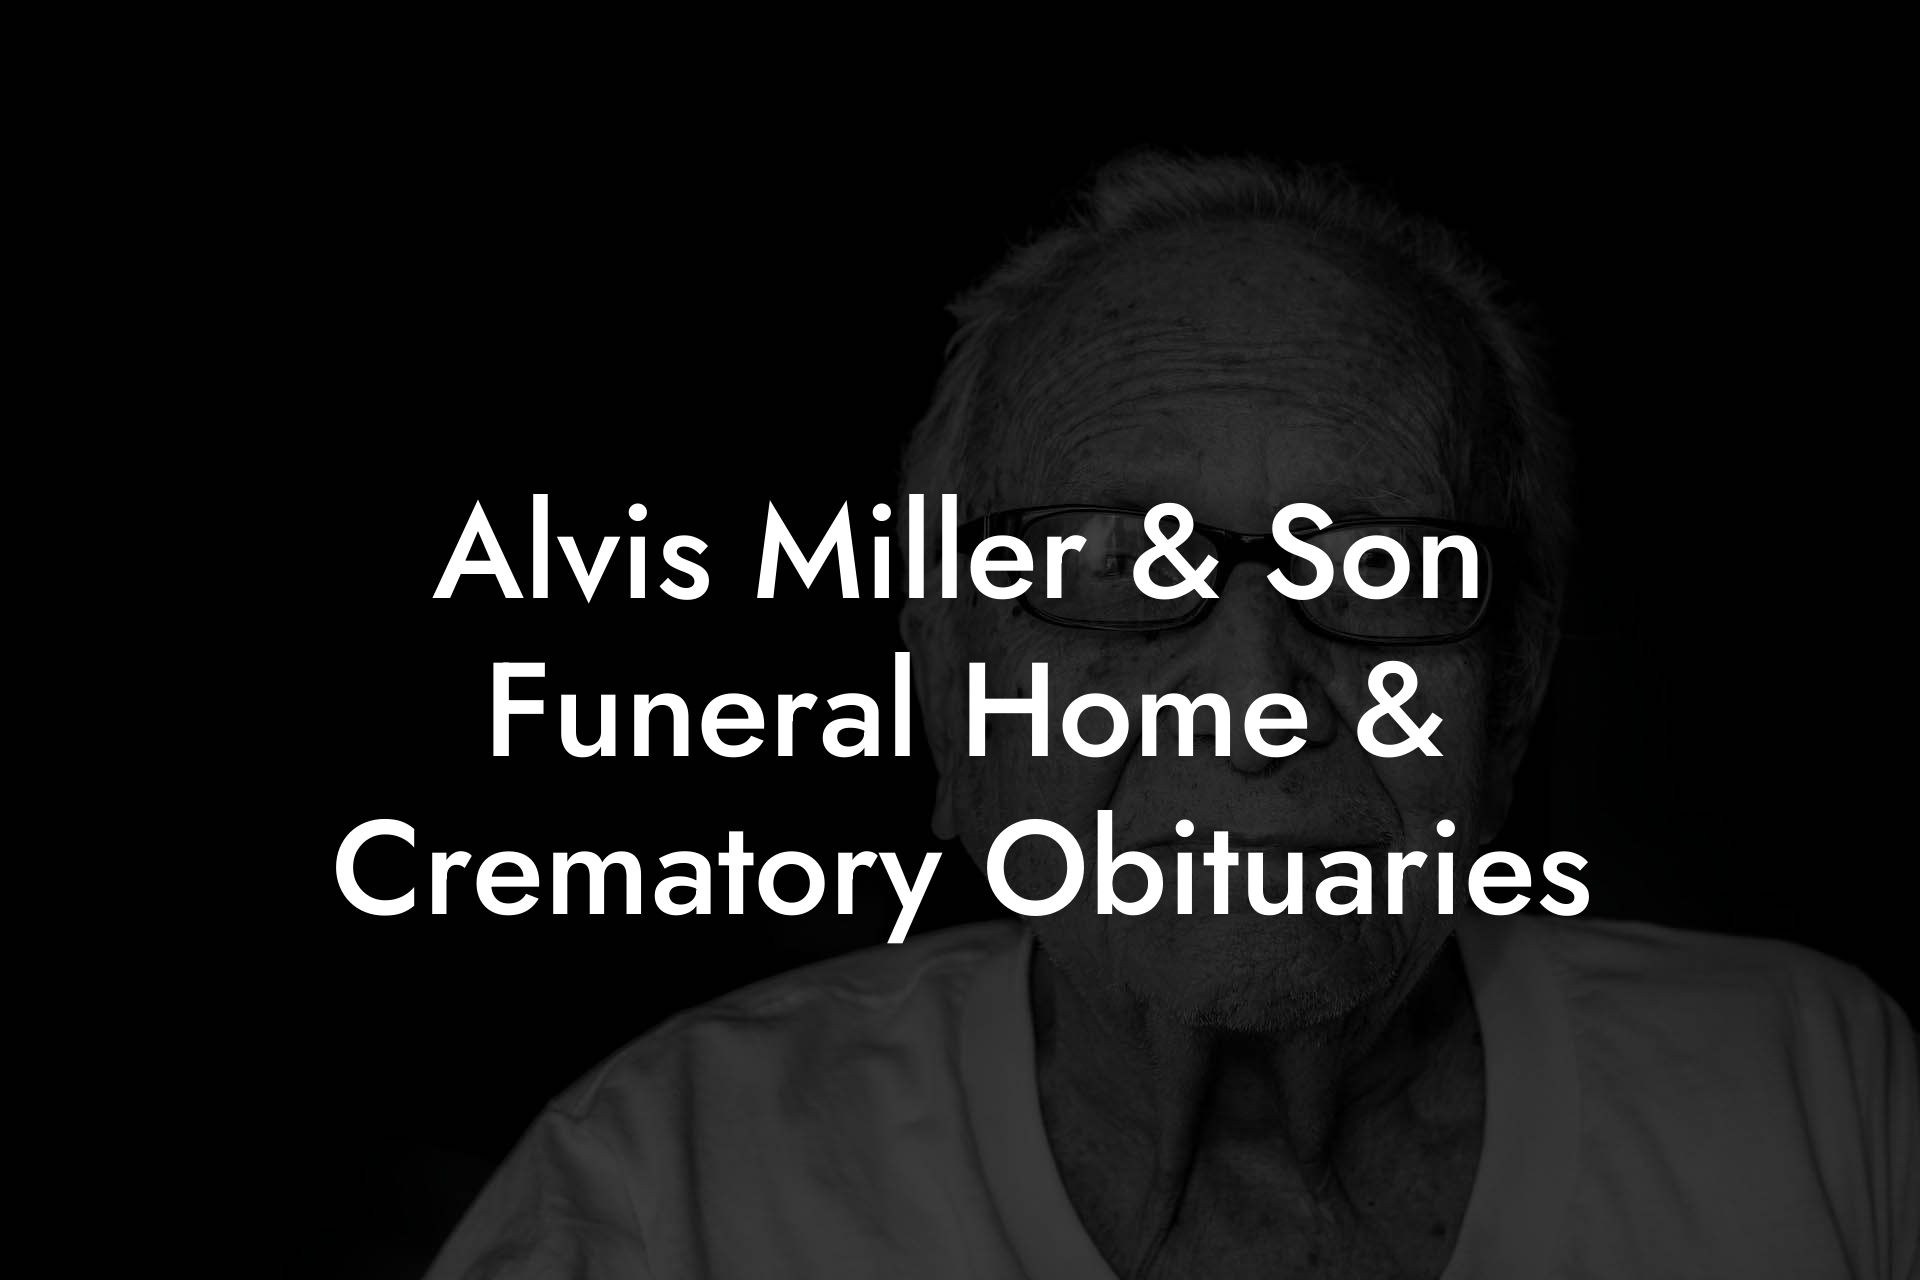 Alvis Miller & Son Funeral Home & Crematory Obituaries